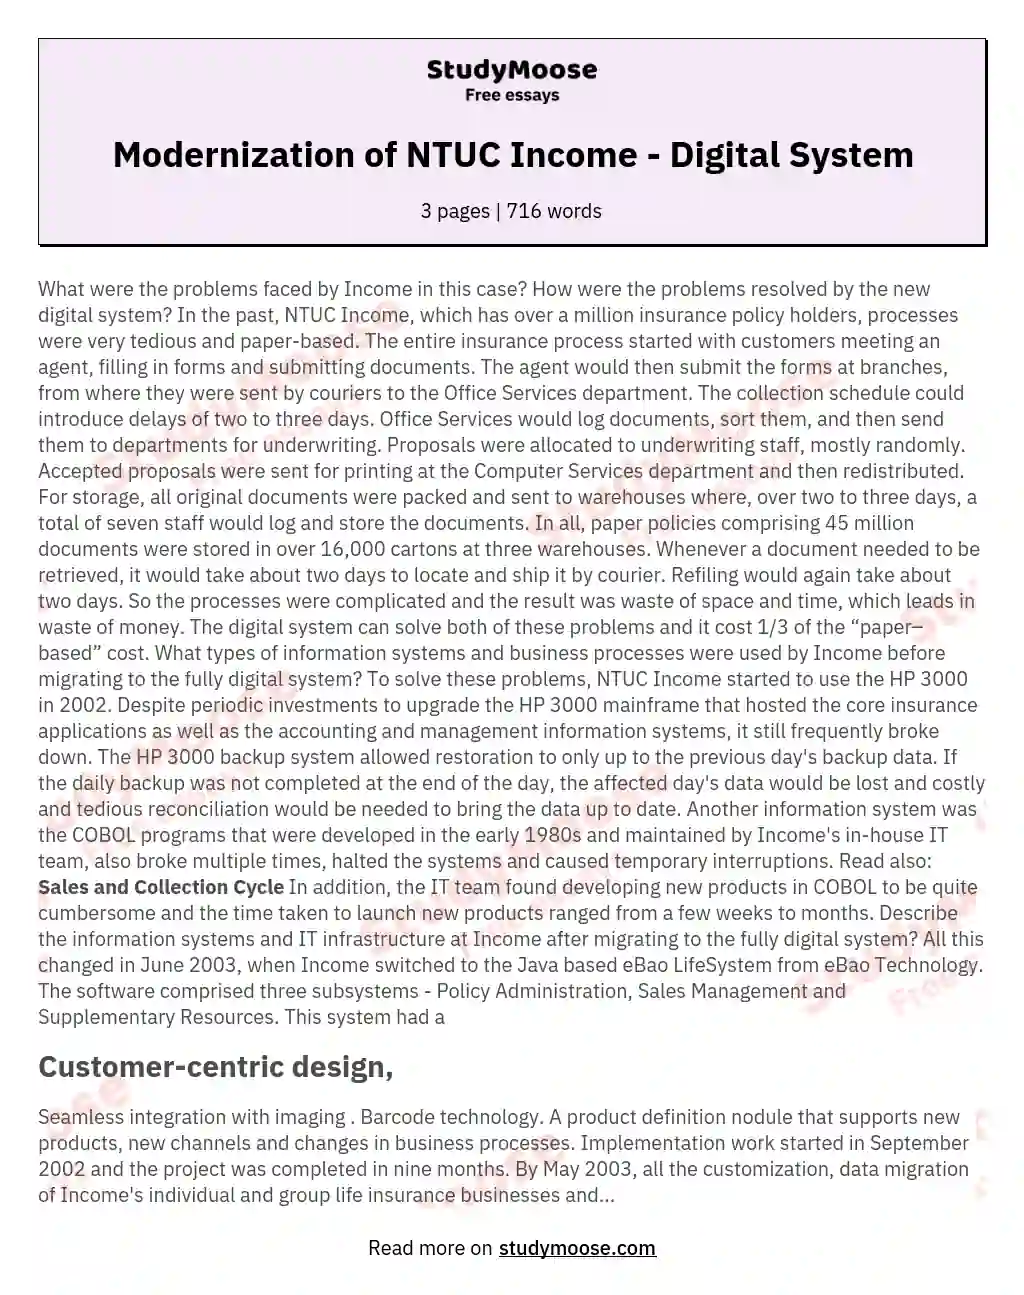 Modernization of NTUC Income - Digital System essay